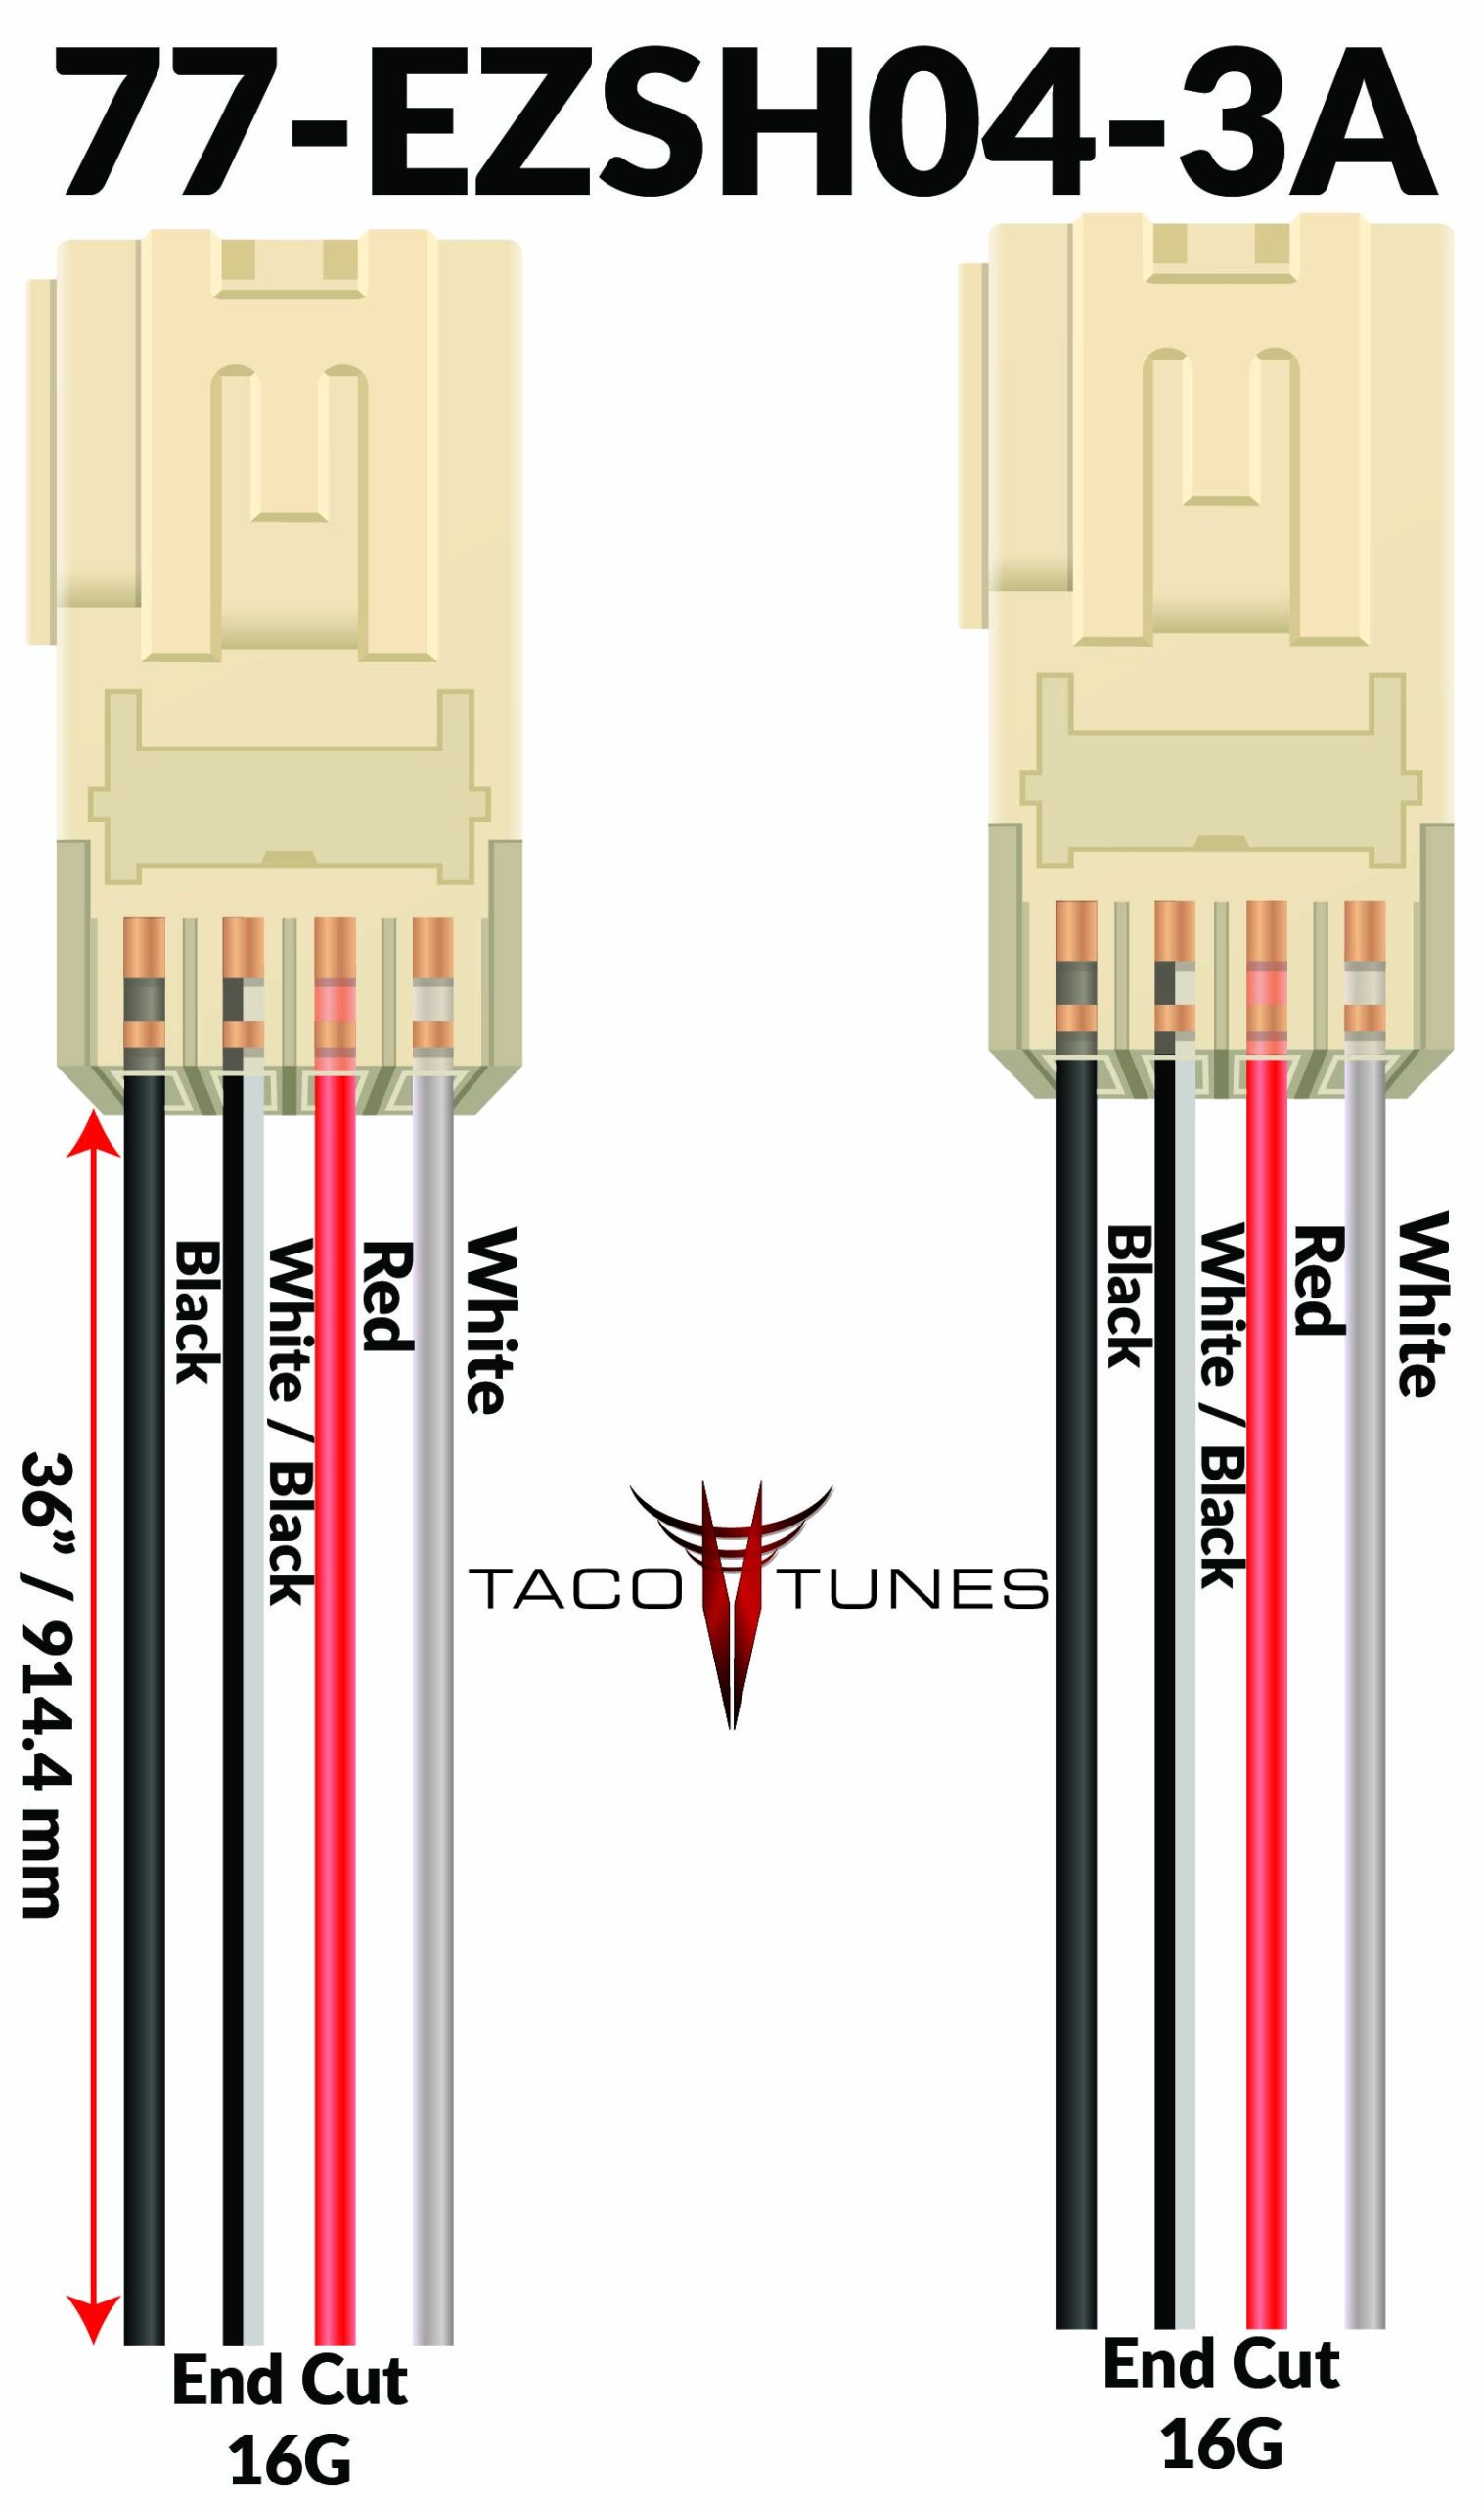 2022+ Toyota Tundra Tweeter (Dash Speaker) Wire Harness Adapters (Pair)